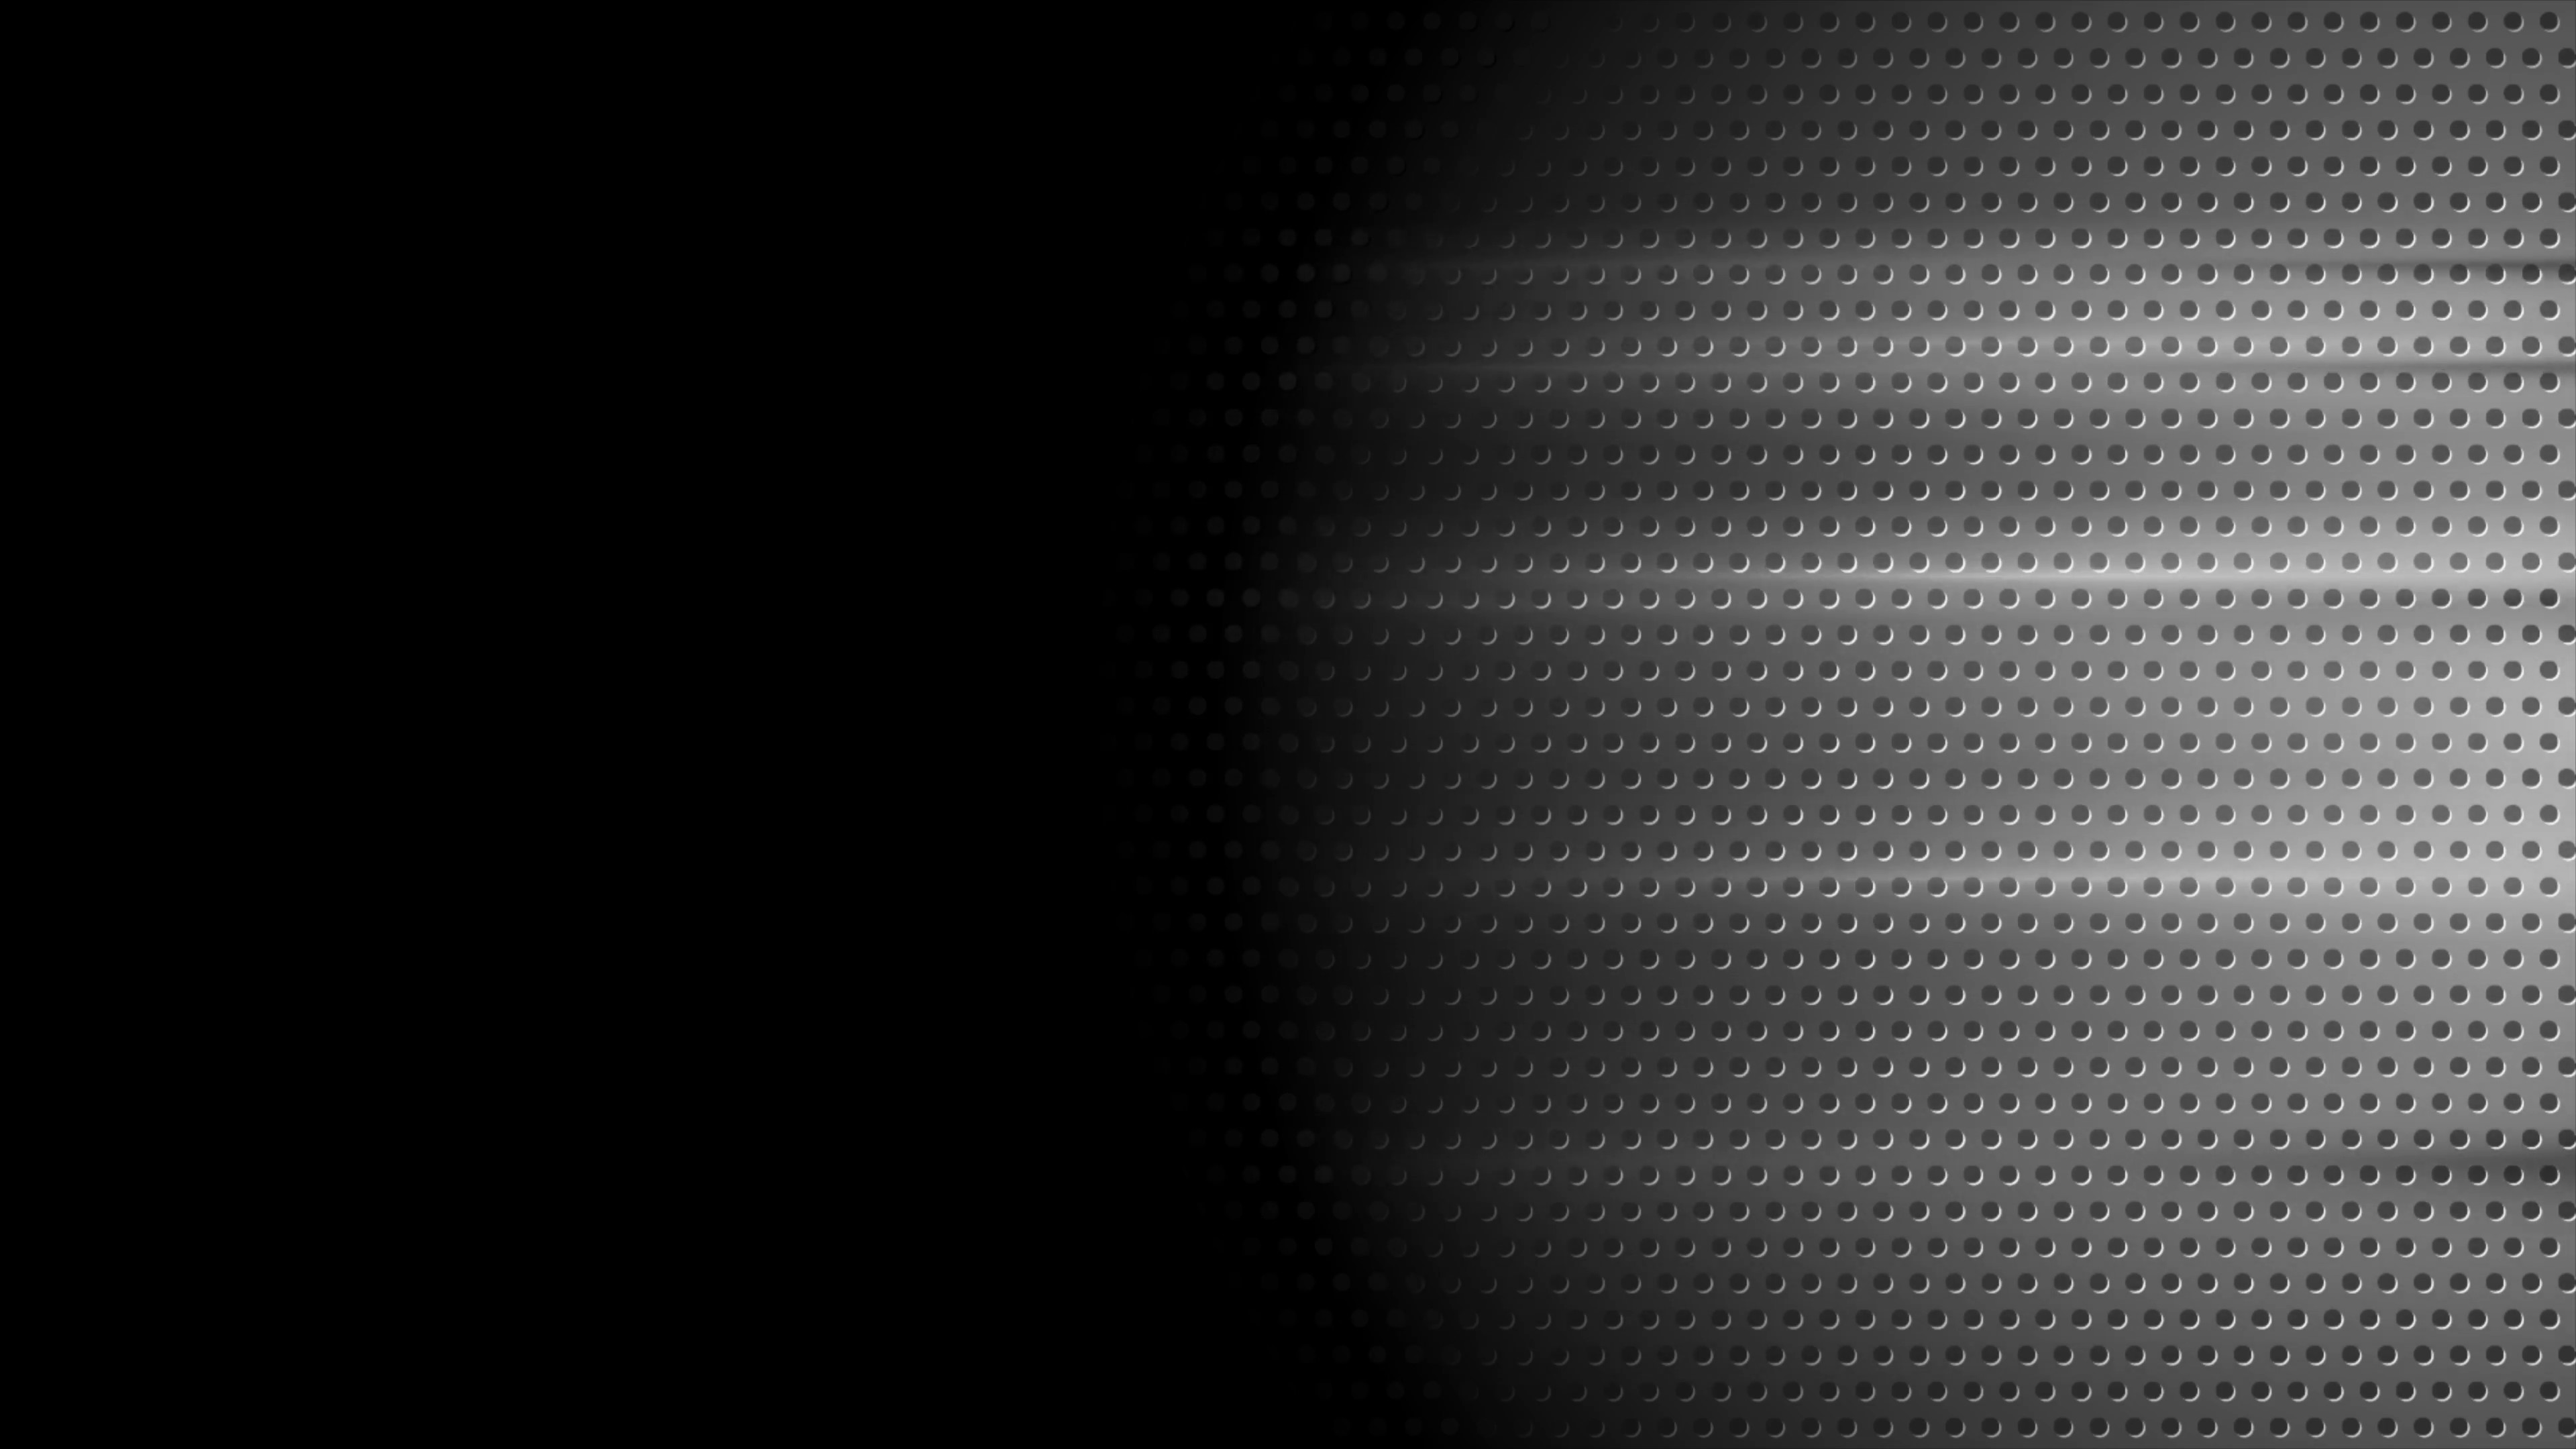 chrome wallpaper hd,black,text,monochrome,black and white,line